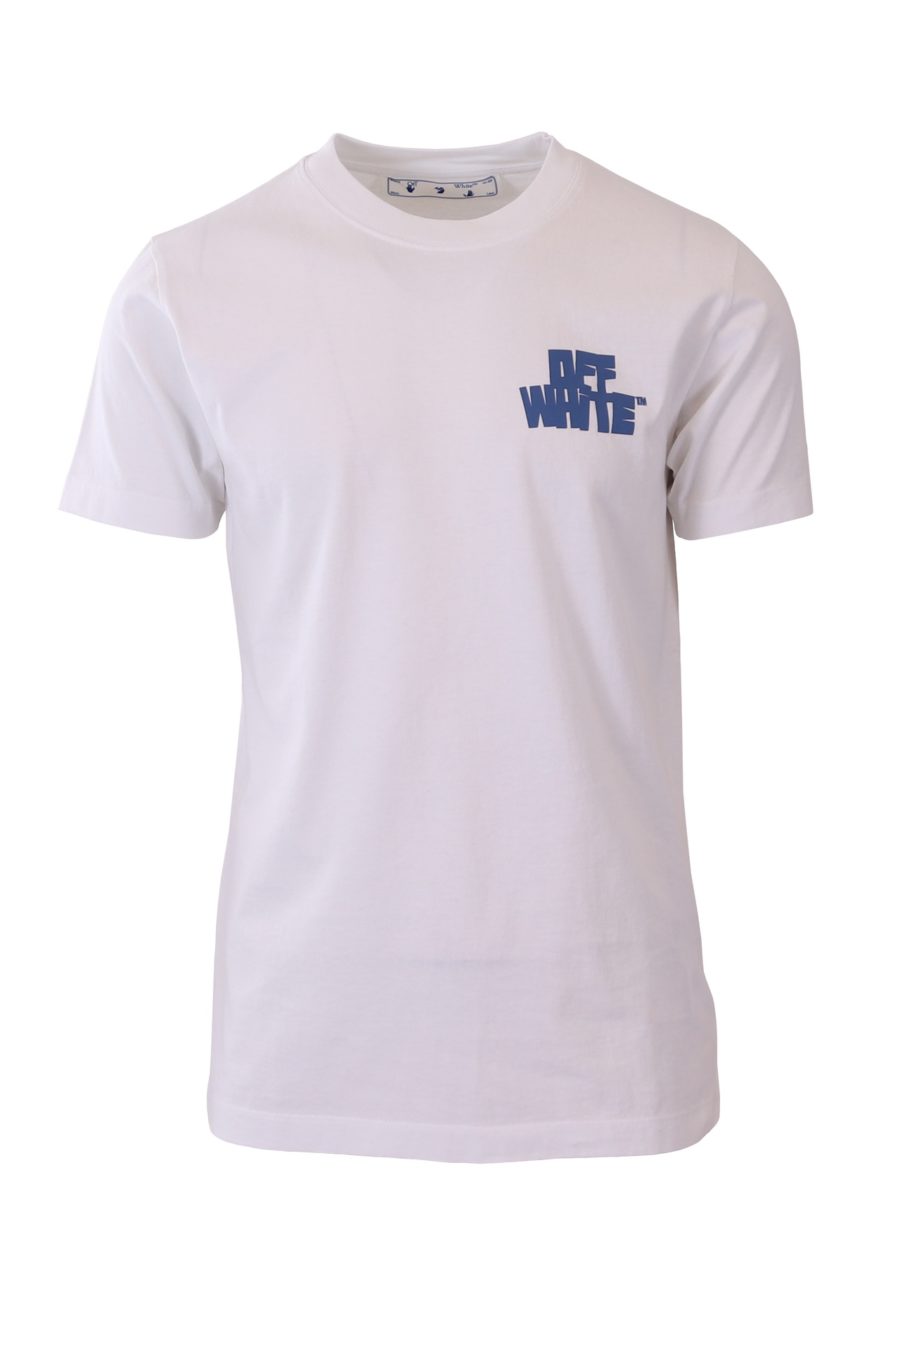 T-Shirt Off-White weiß blau Druck - 0505ba4dc0632876082a1700eb5faed2a08eabec